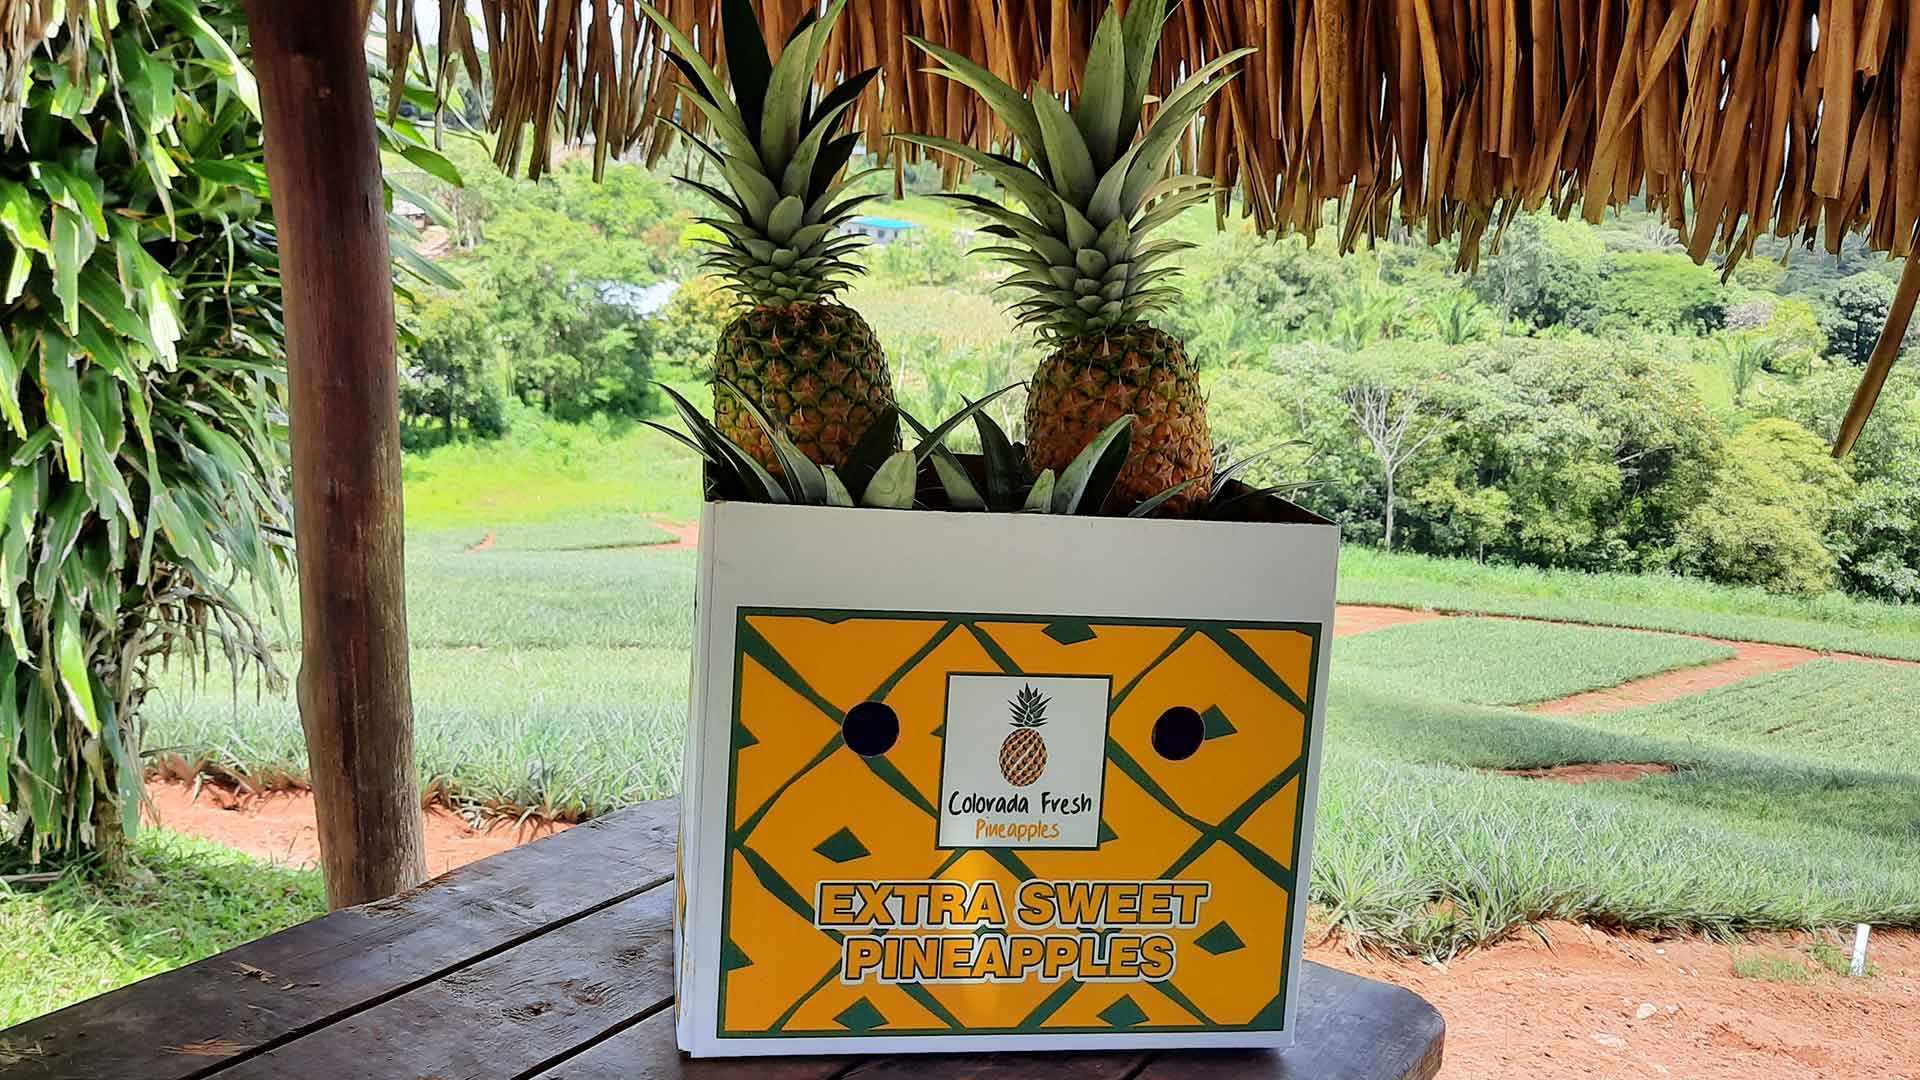 Colorada Fresh Pineapples